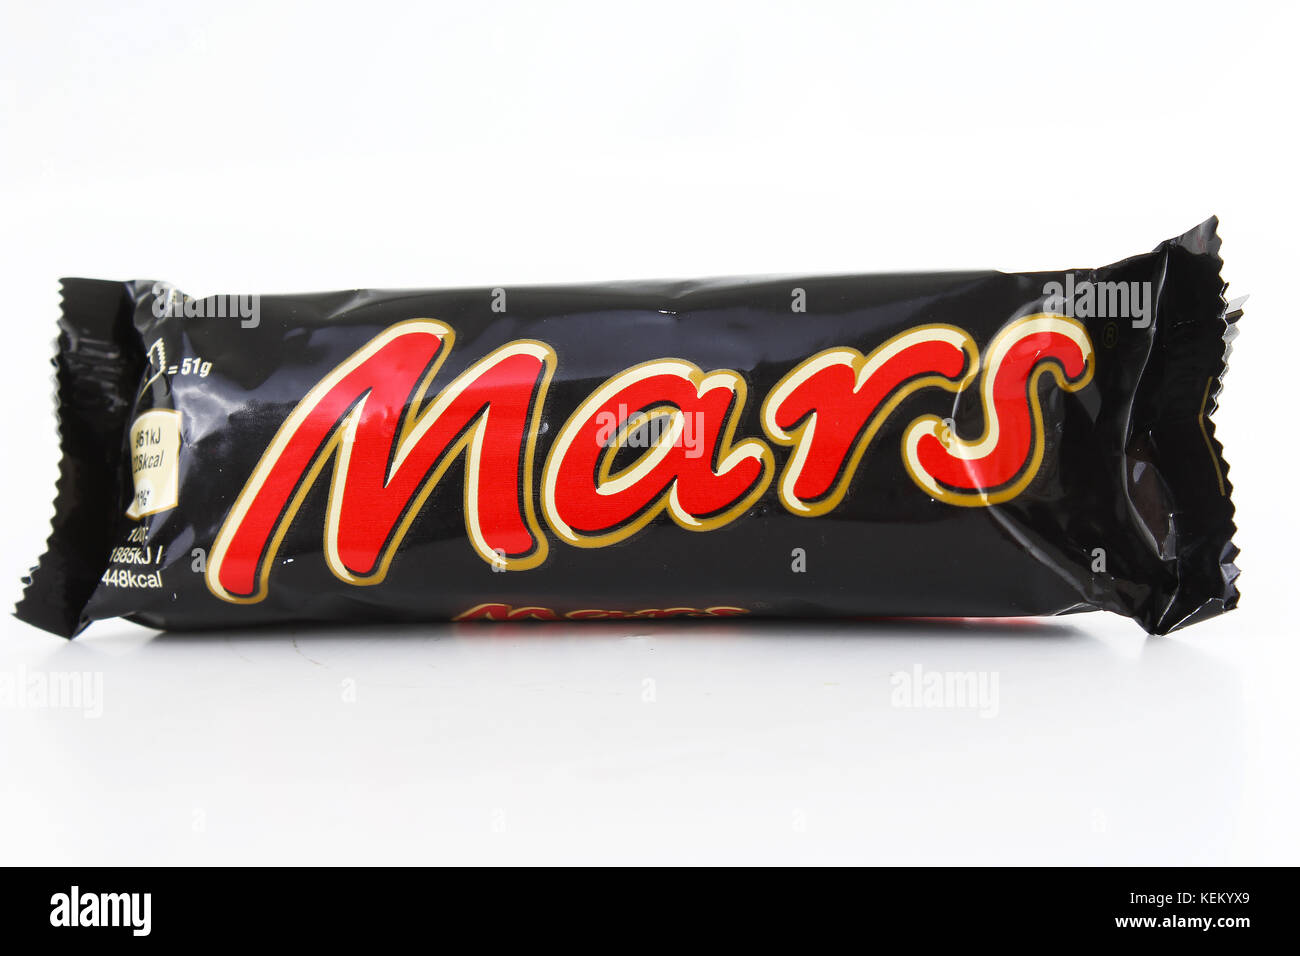 Mars chocolate bar Stock Photo - Alamy